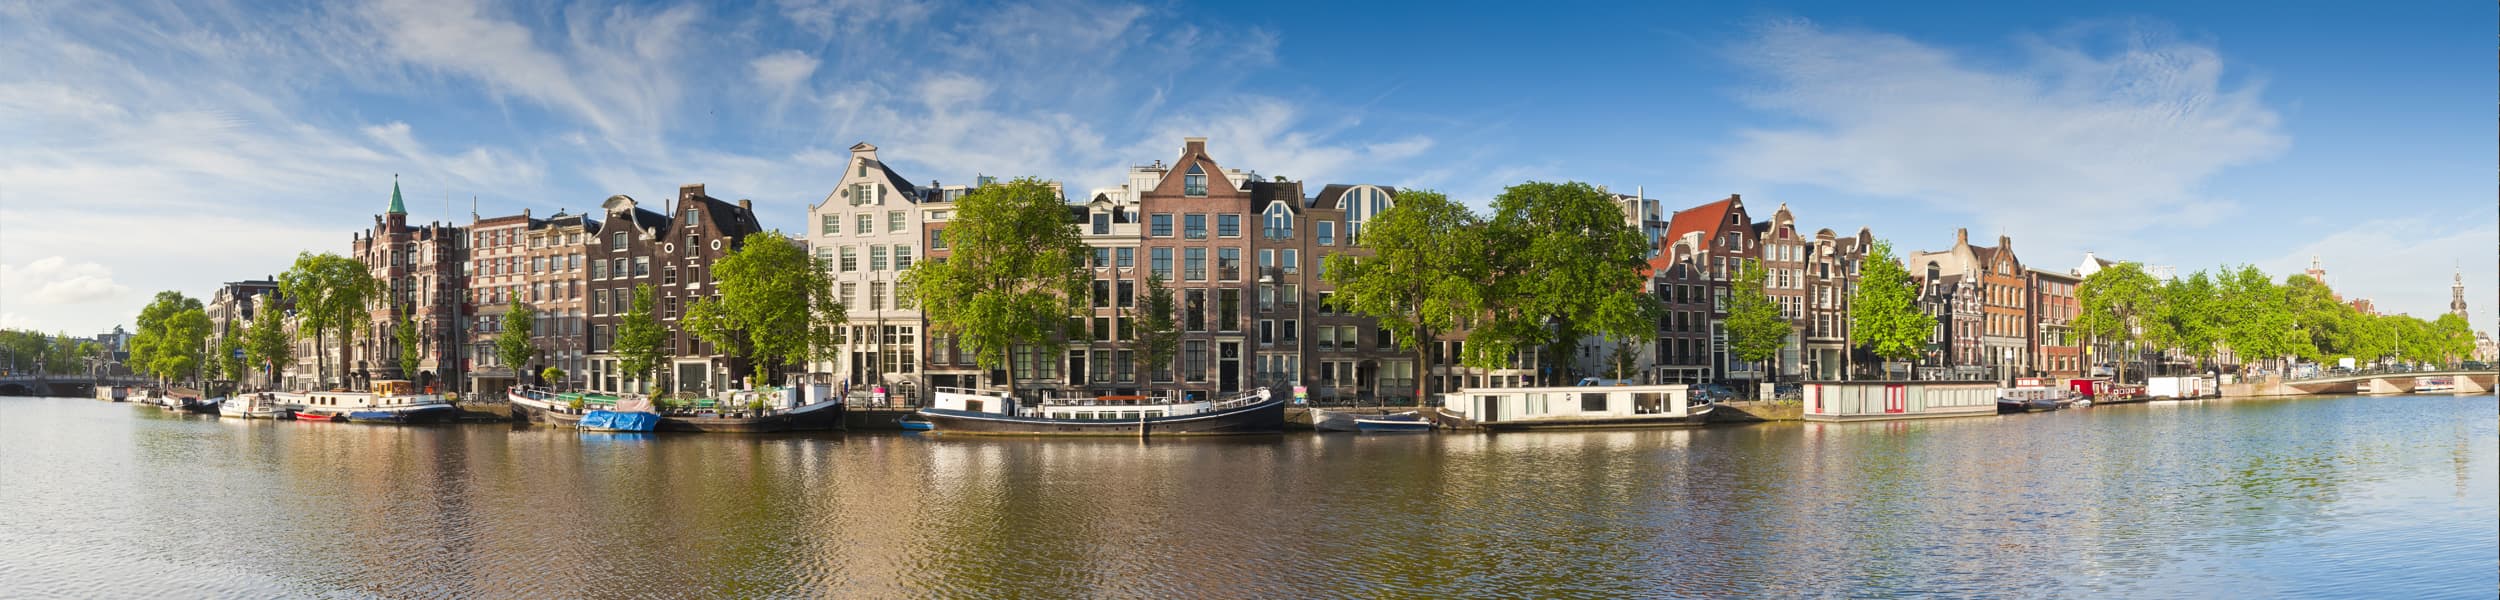 Java Software Engineer – Platform Engineering Amsterdam, the Netherlands